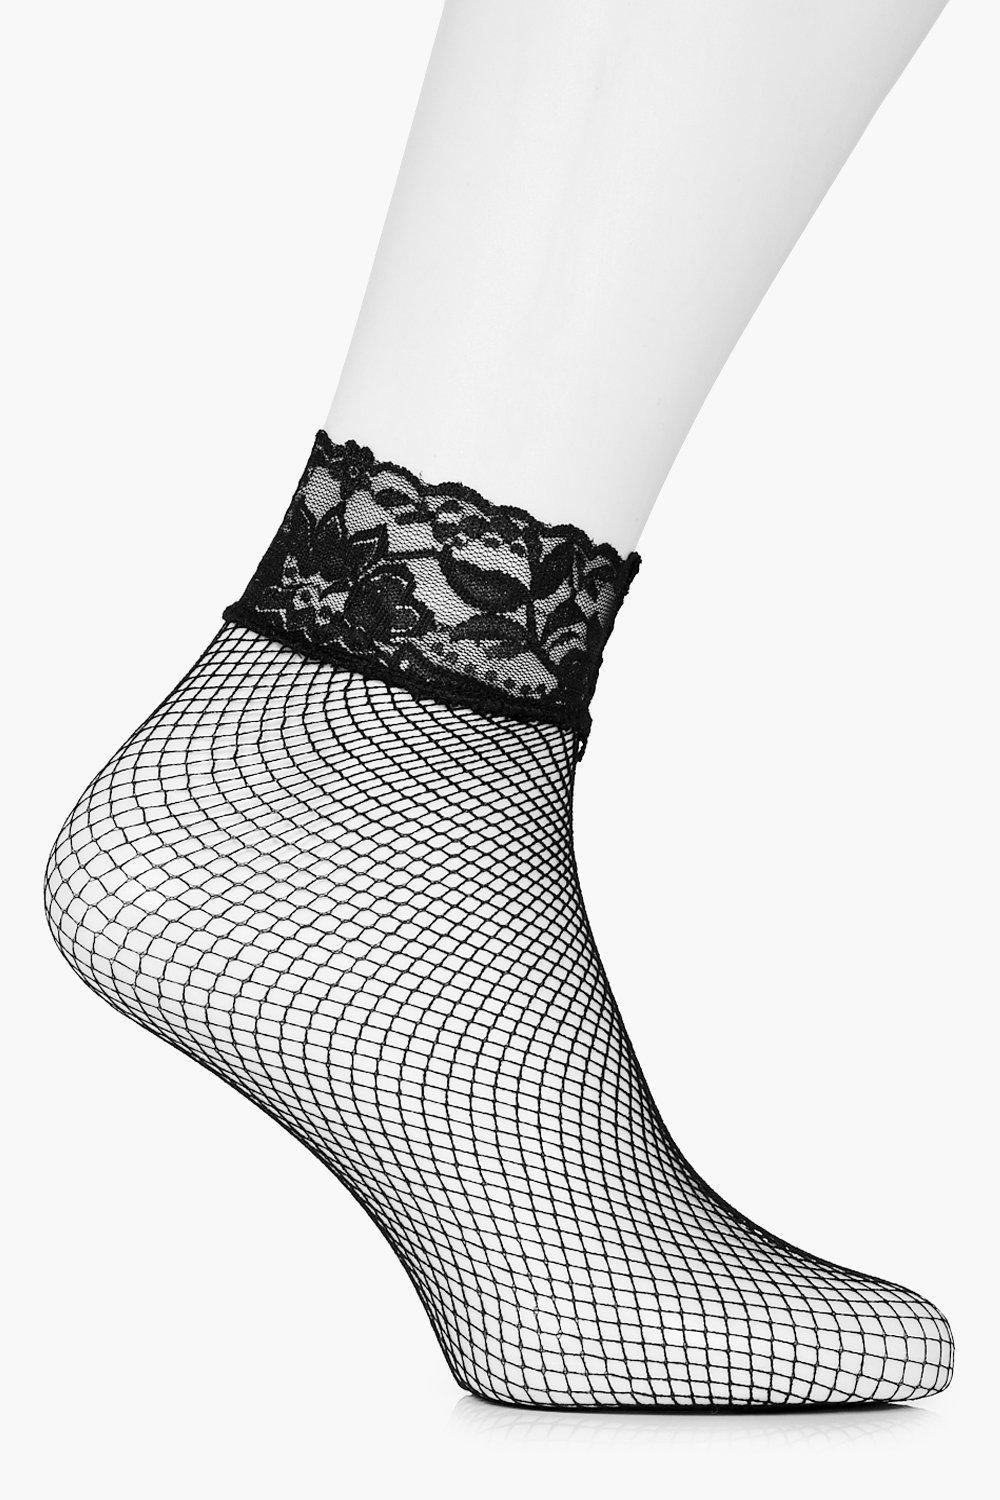 Ellie Small Scale Fishnet Ankle Socks